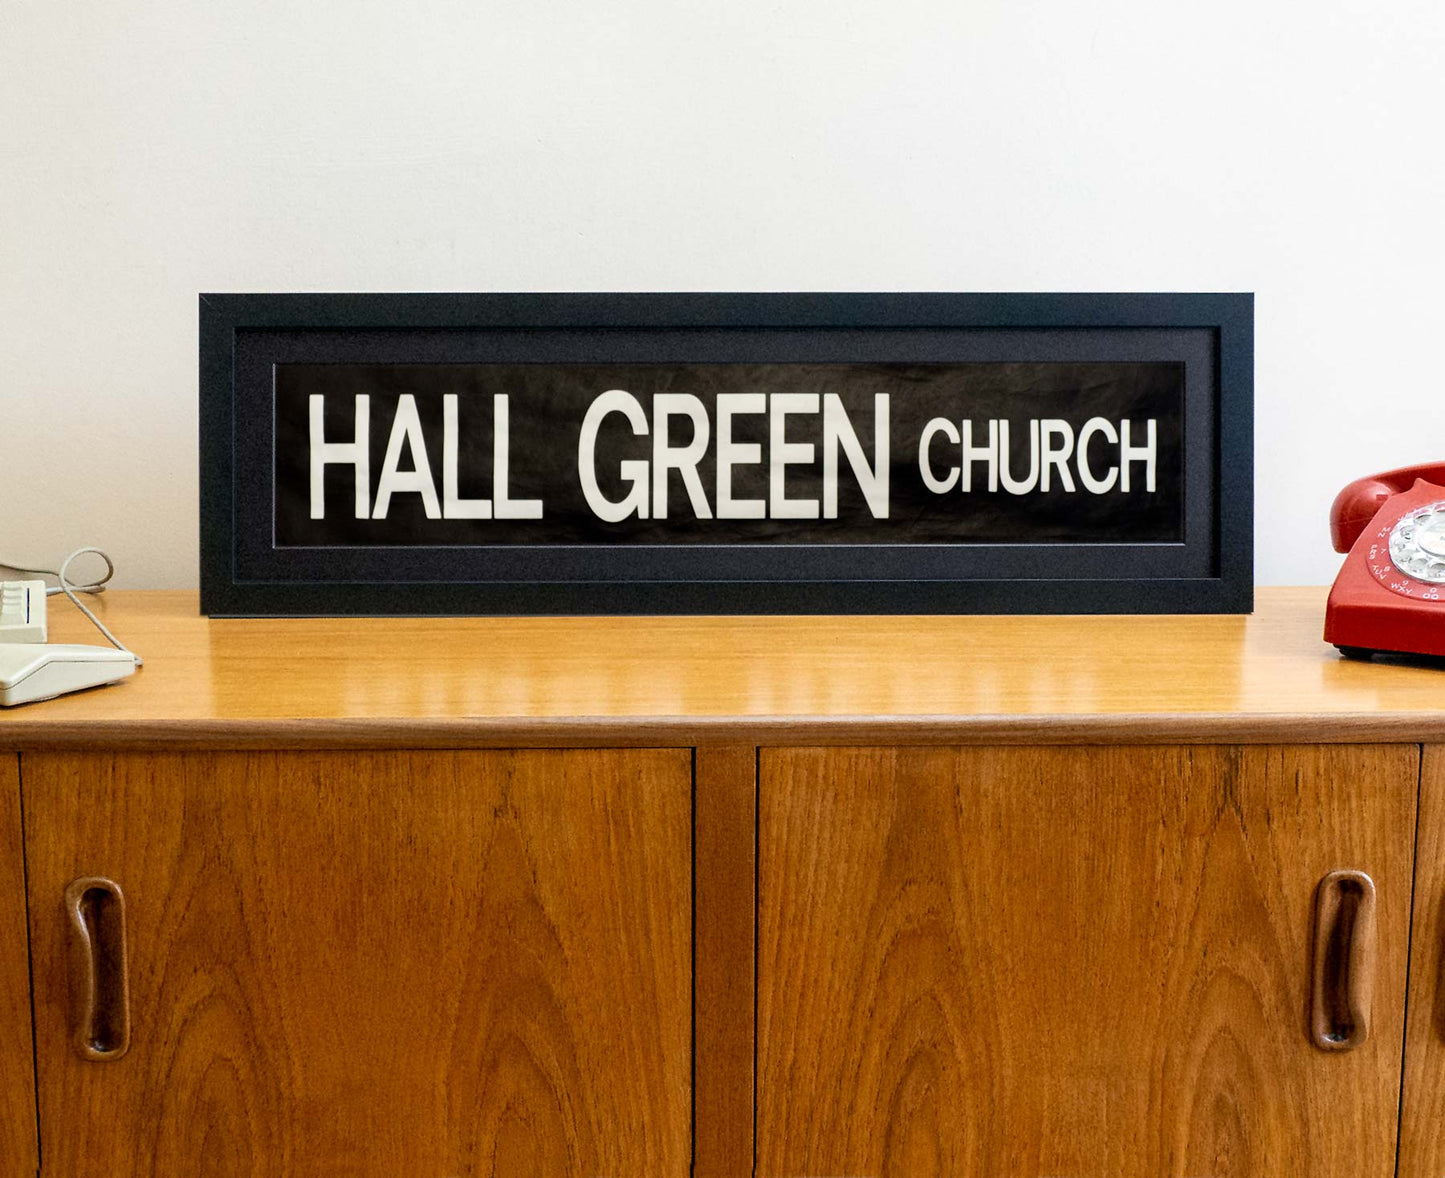 Hall Green Church 1990s framed original bus blind